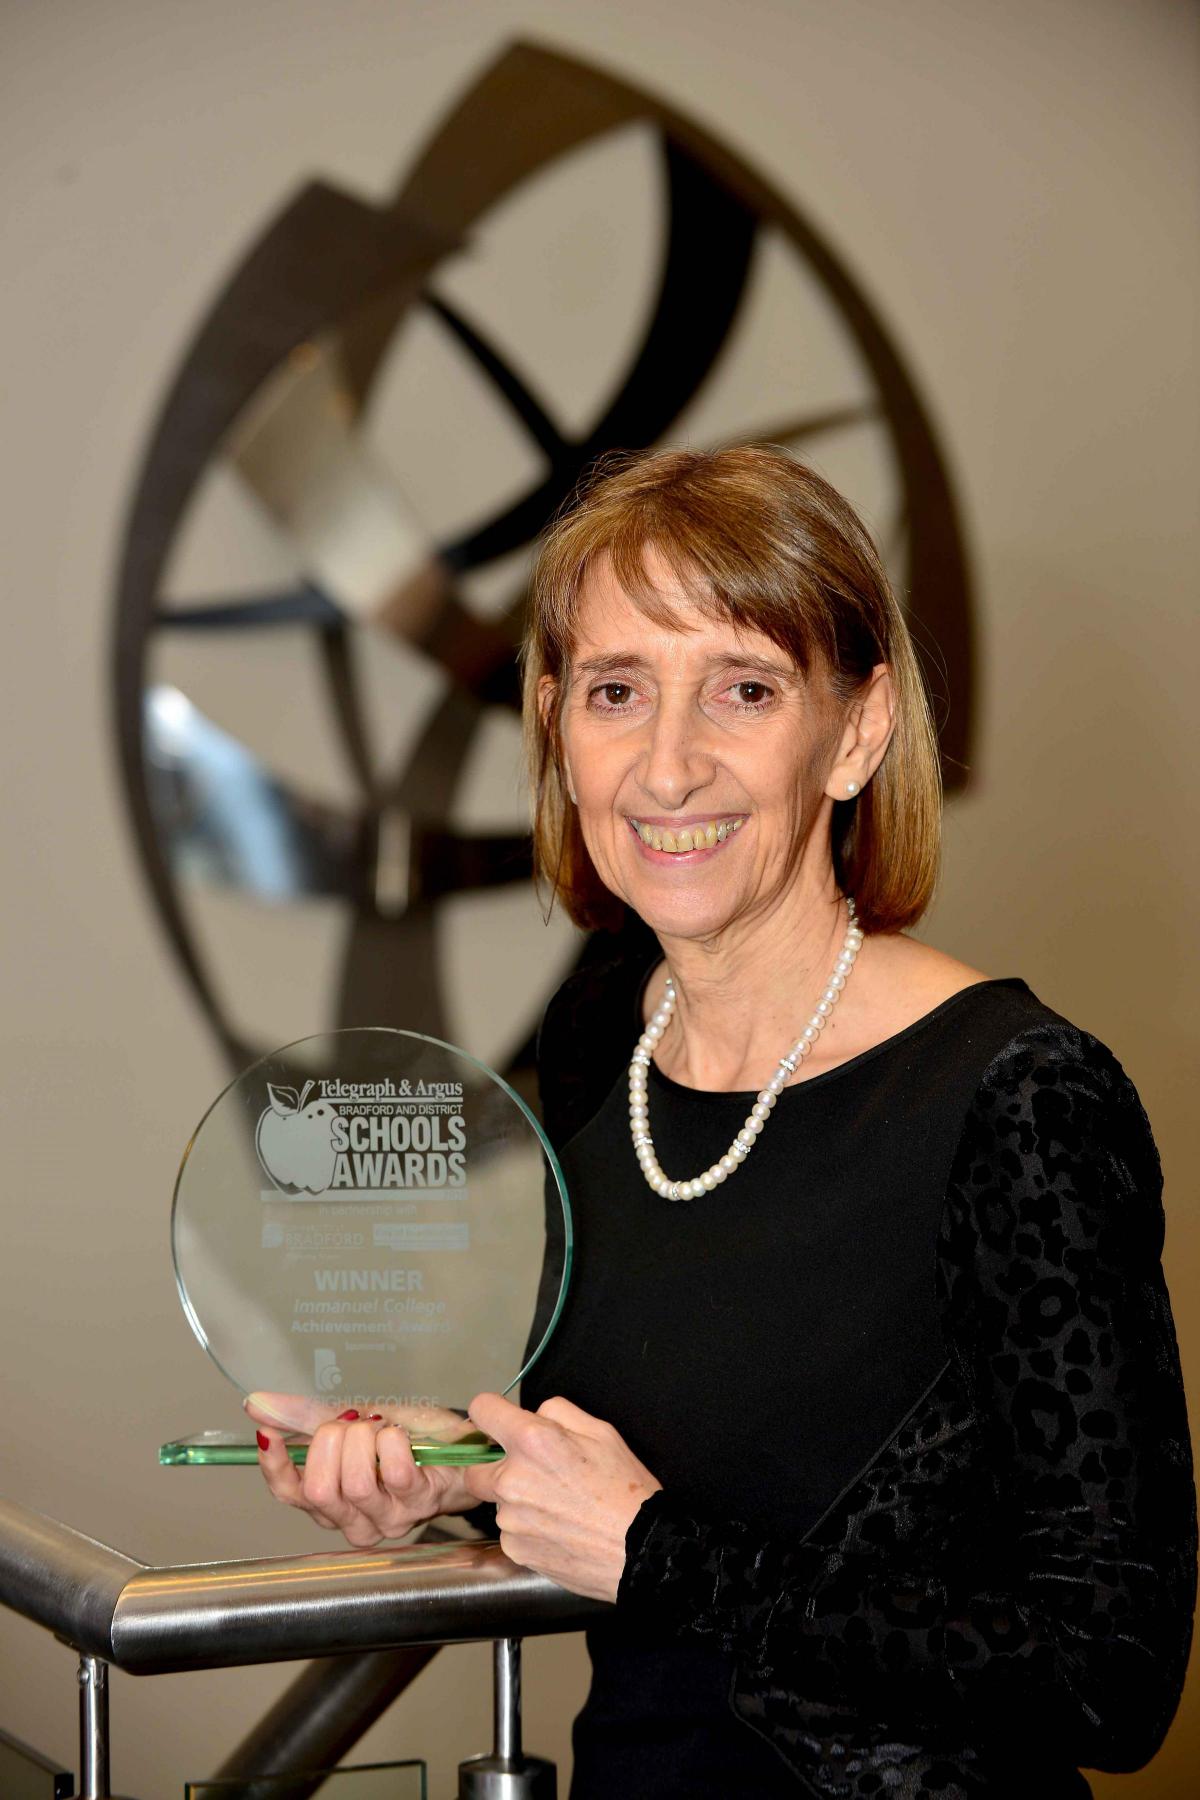 Jane Tiller, head of Immanuel College, winner of the Achievement Award